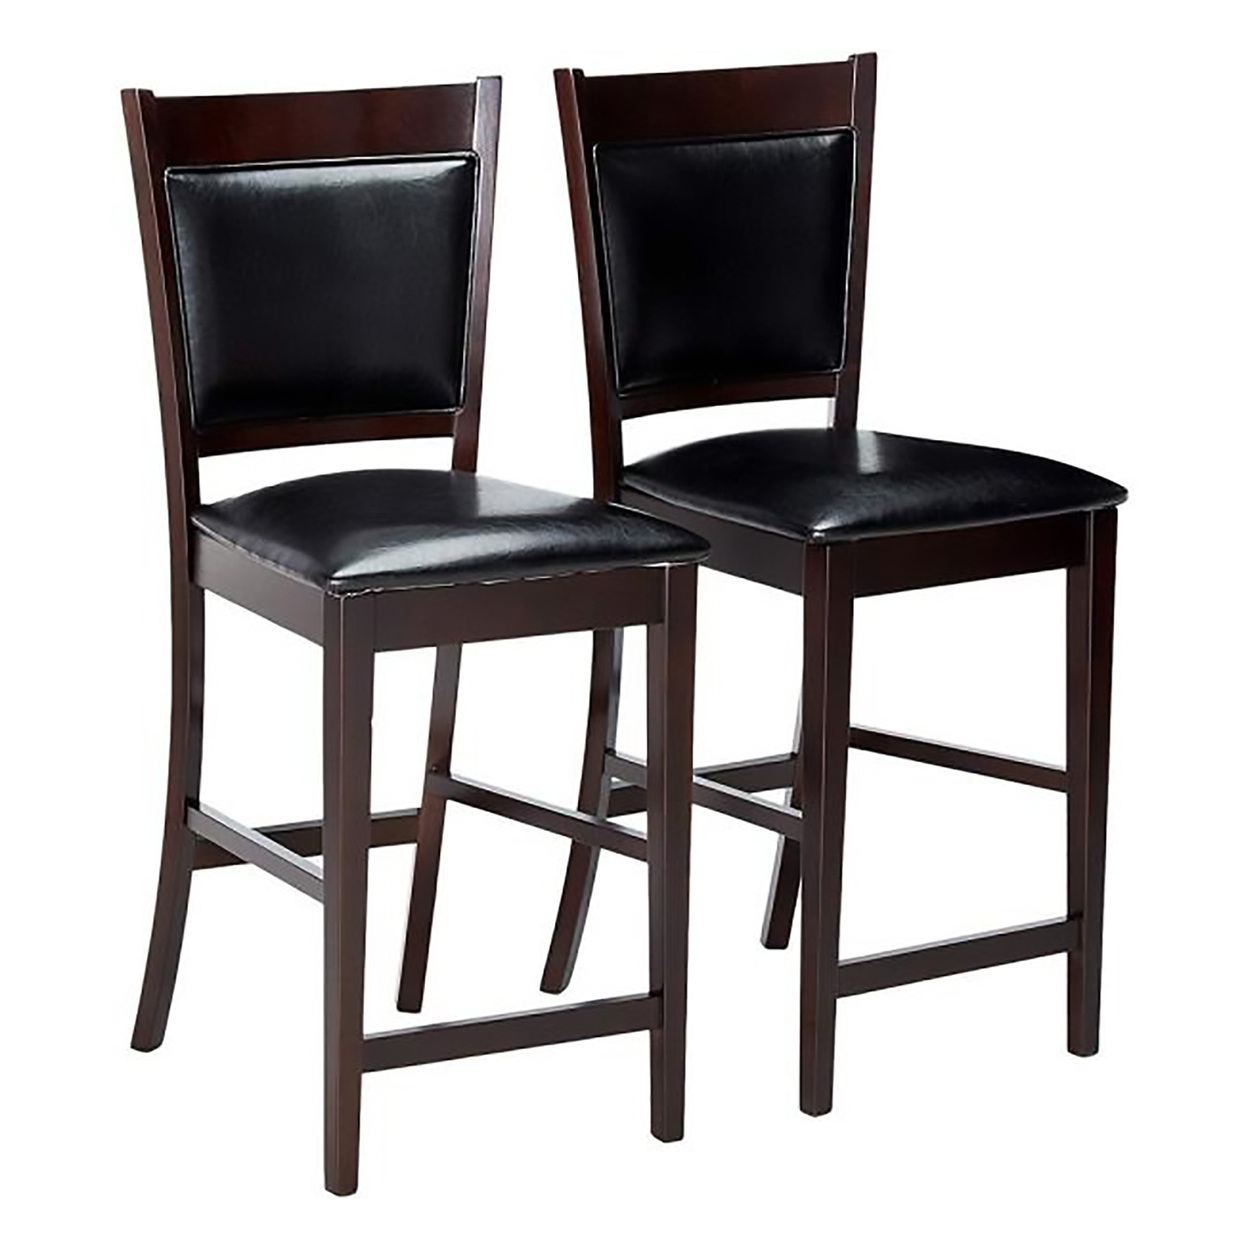 Counter Height Chair Vinyl Padded Seat & Back, Espresso Brown, Set Of 2- Saltoro Sherpi